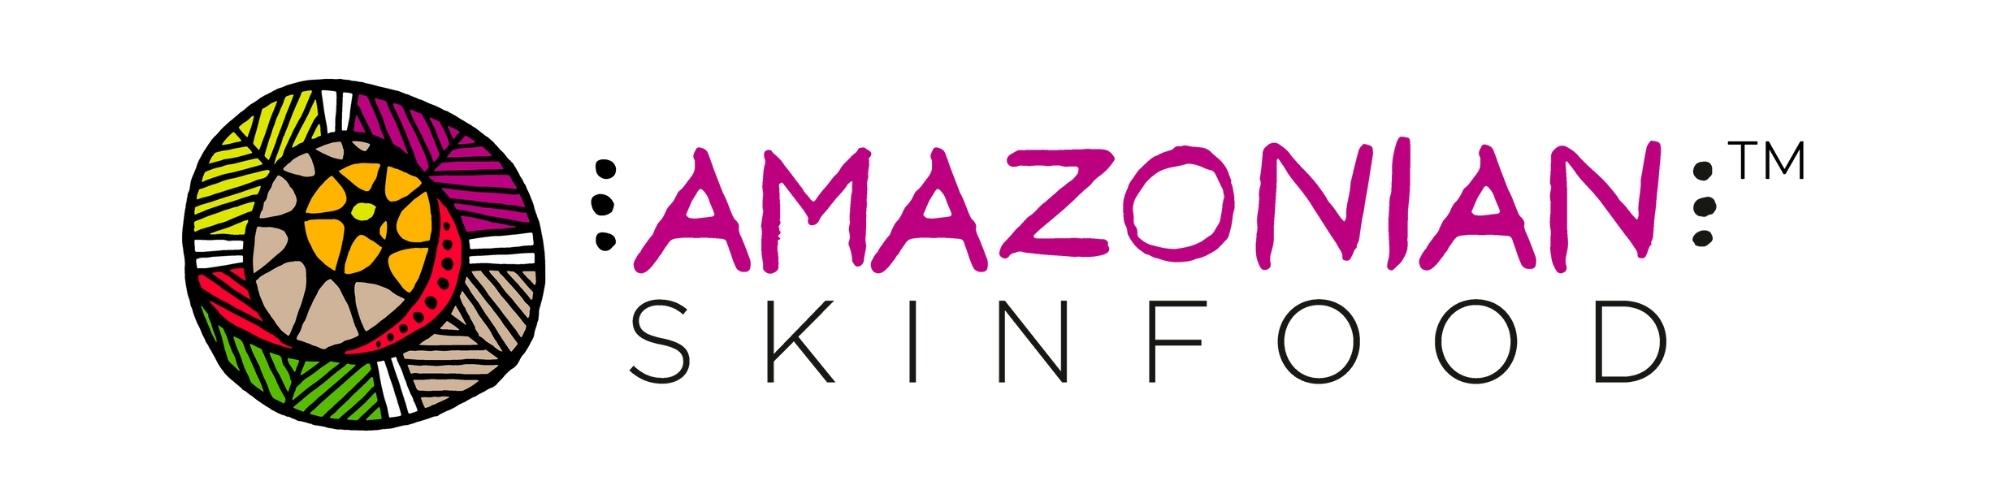 Amazonian Skinfood Logo